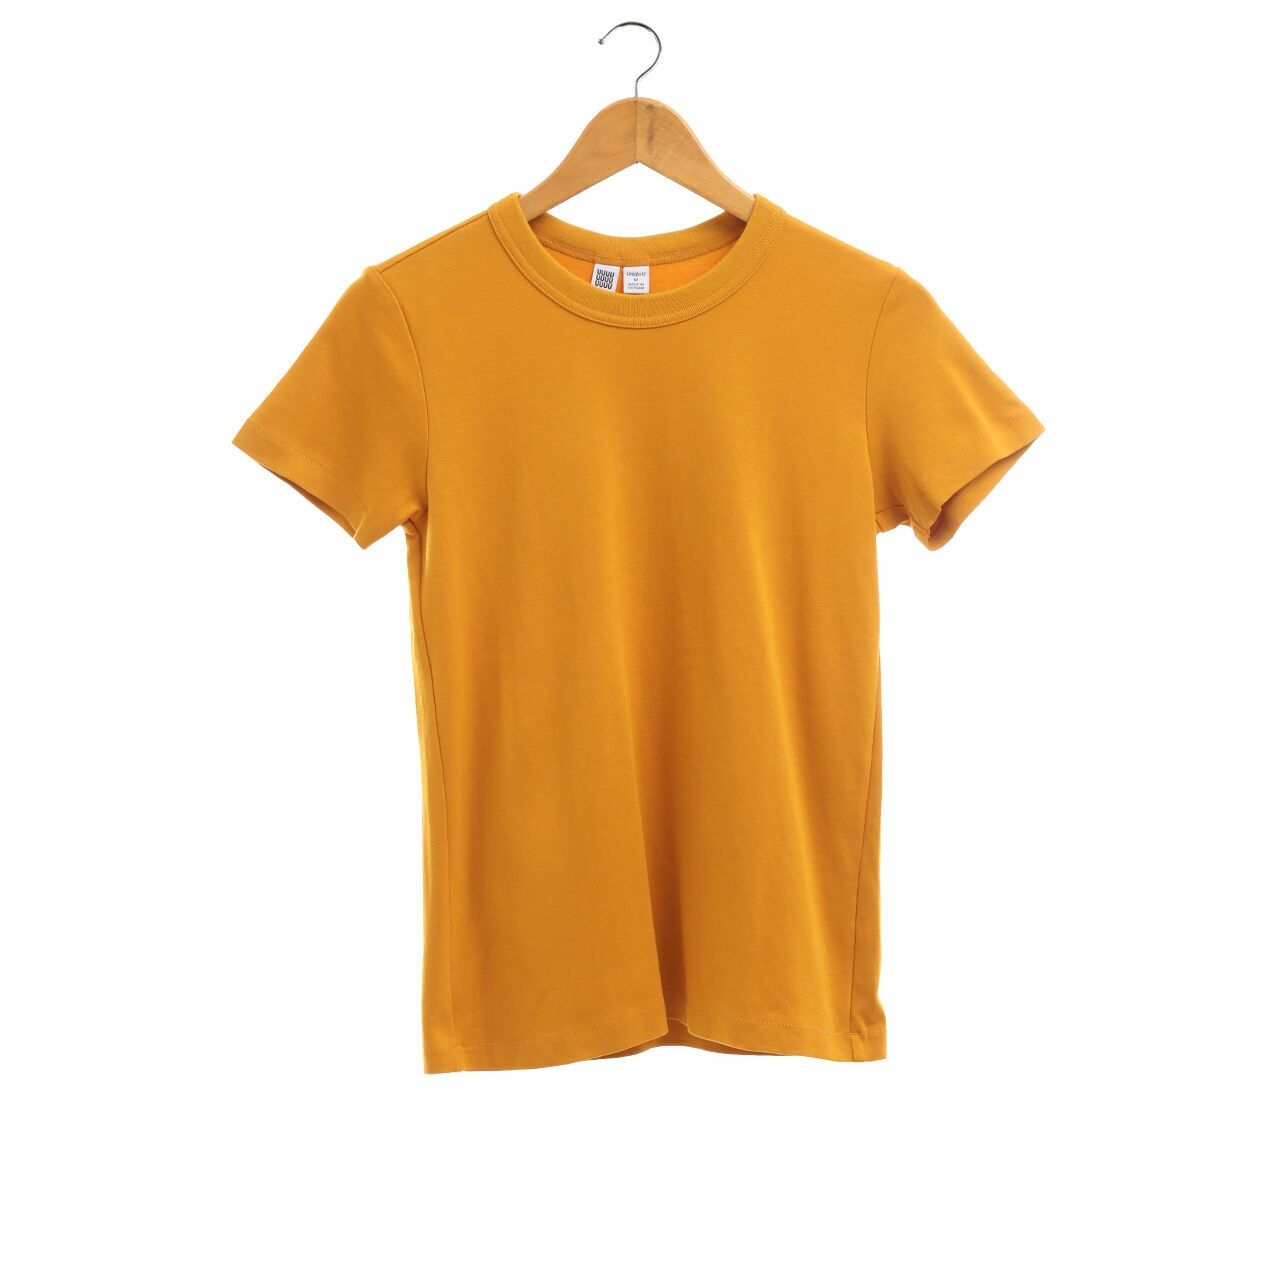 UNIQLO Mustard Tshirt 